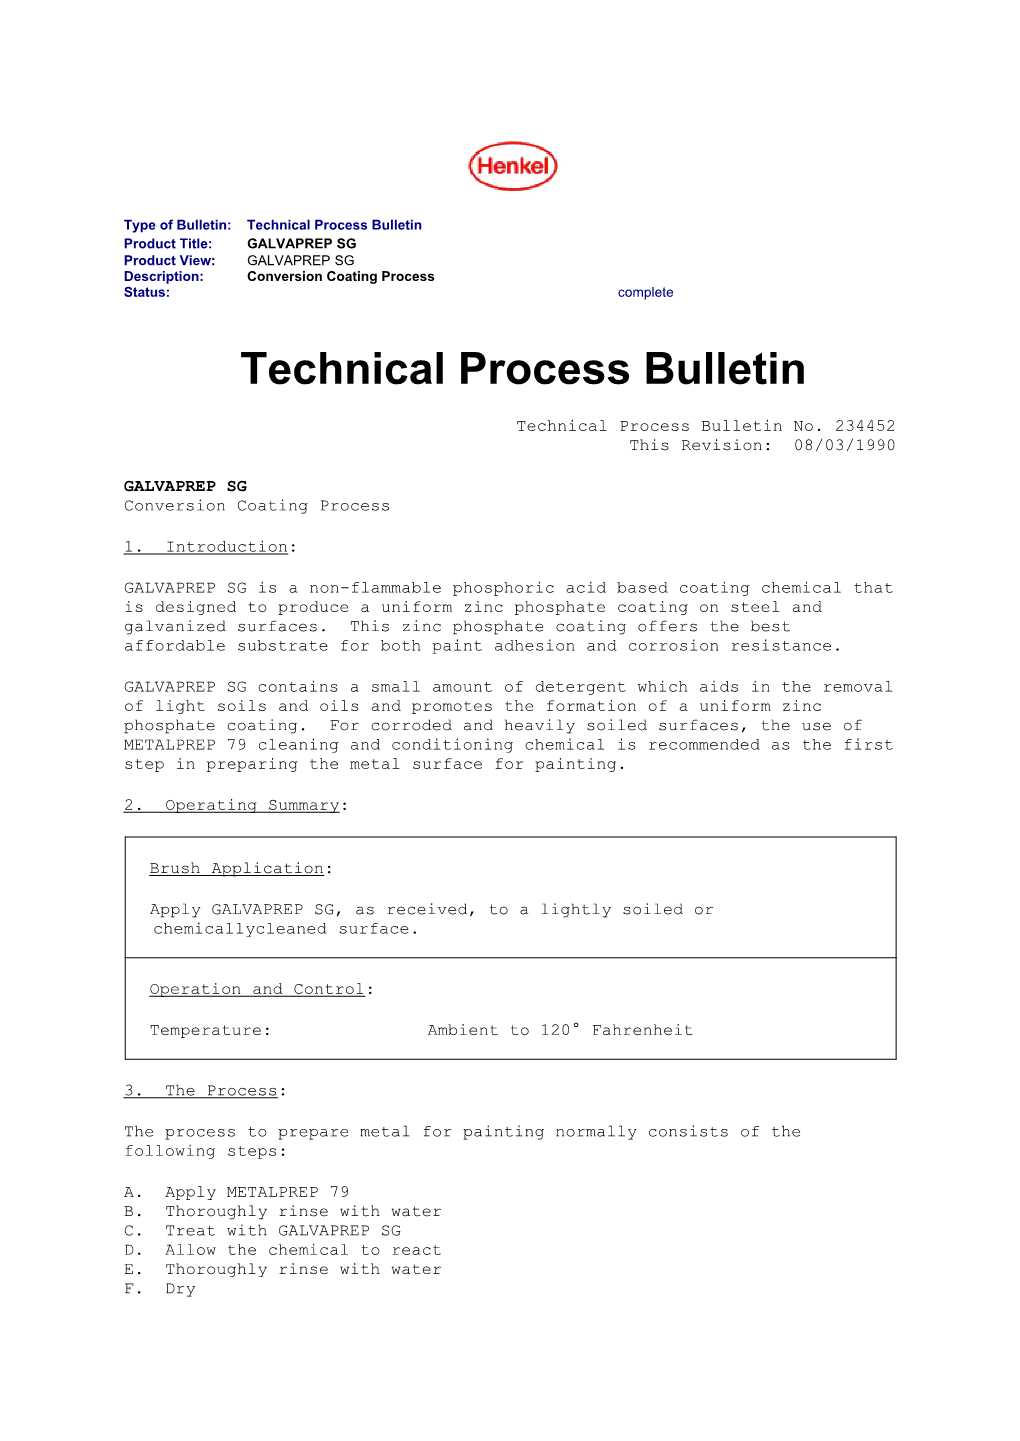 Technical Process Bulletin Product Title: GALVAPREP SG Product View: GALVAPREP SG Description: Conversion Coating Process Status: Complete